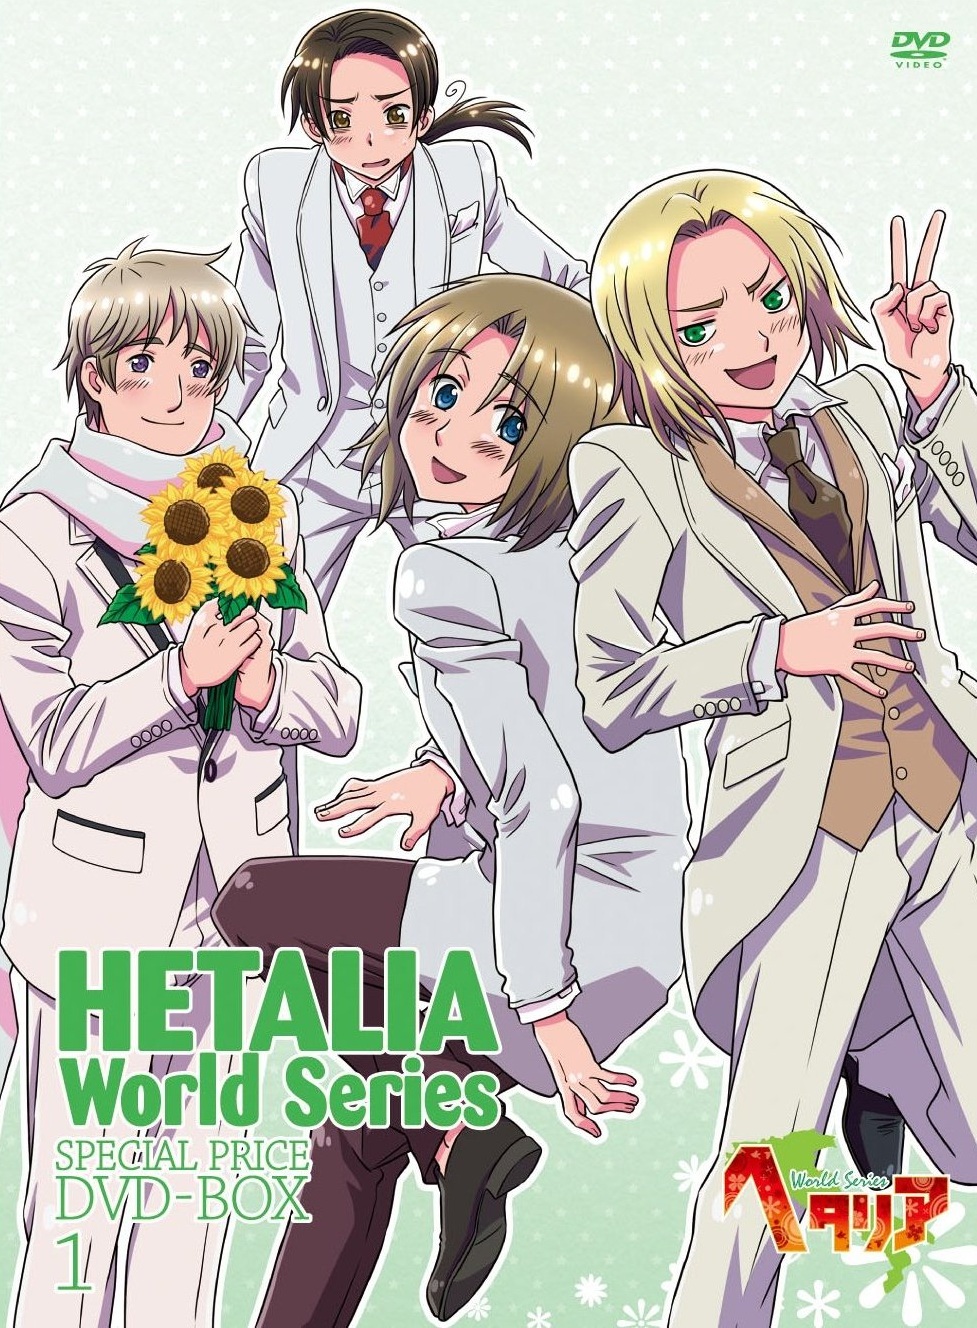 Hetalia World Series Extra Episodes - Hetalia World Series Extra Episodes | Hetalia World Series Specials | Hetalia=Fantasia